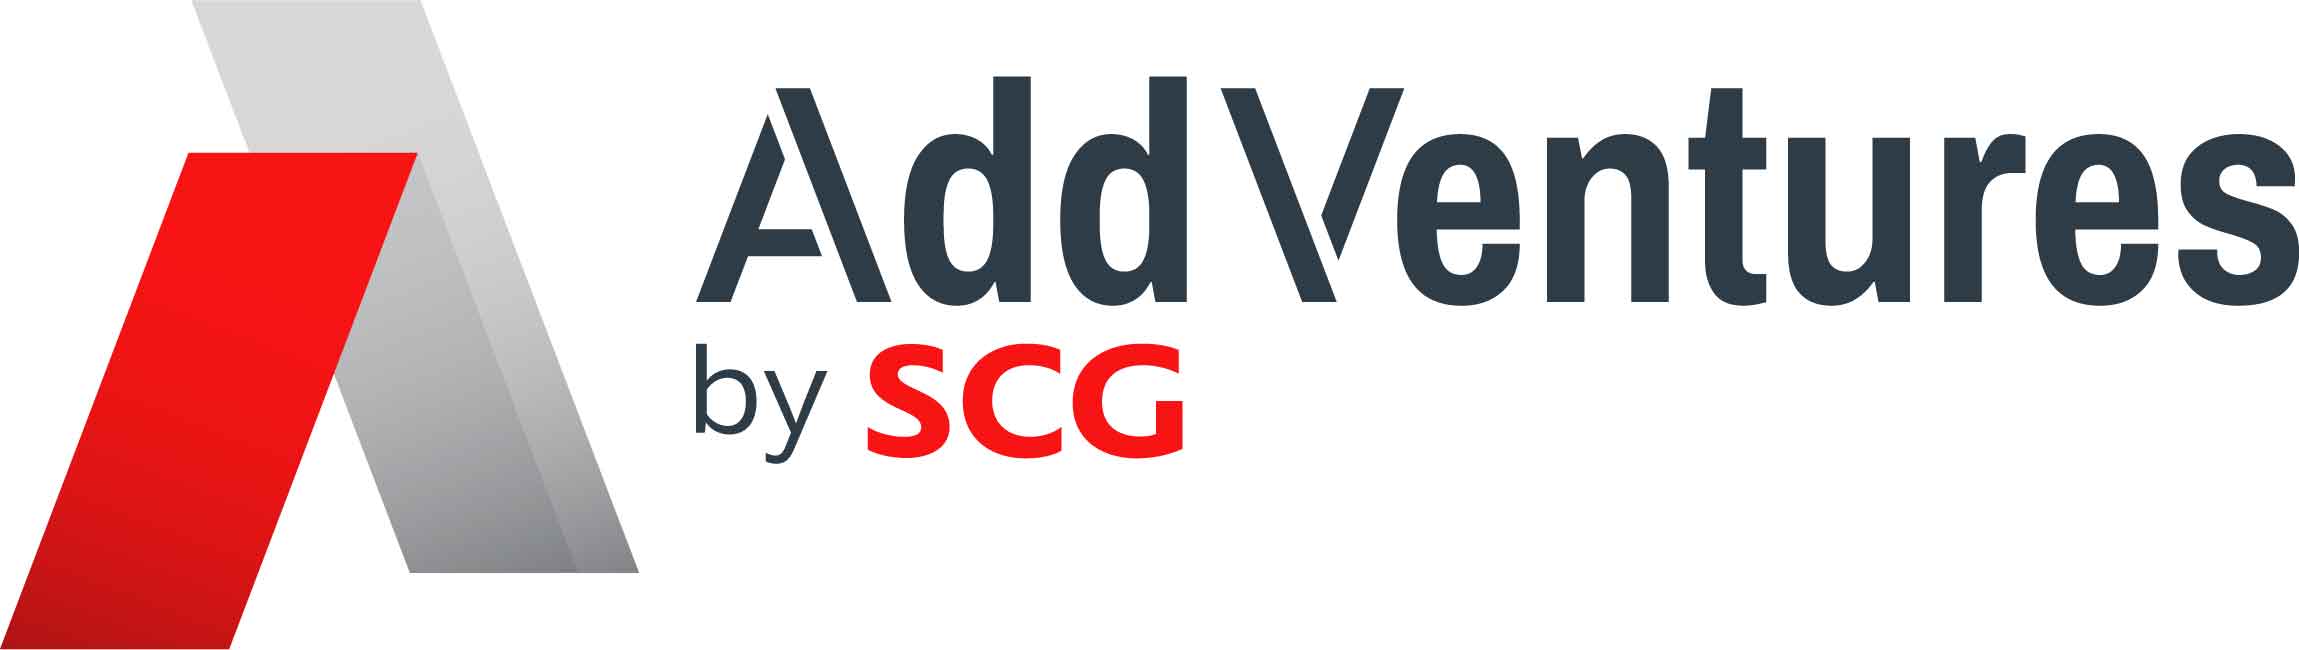 Download SCG ตั้งบริษัทลูก AddVentures ลงทุนสตาร์ทอัพทั่วโลก เน้น ...